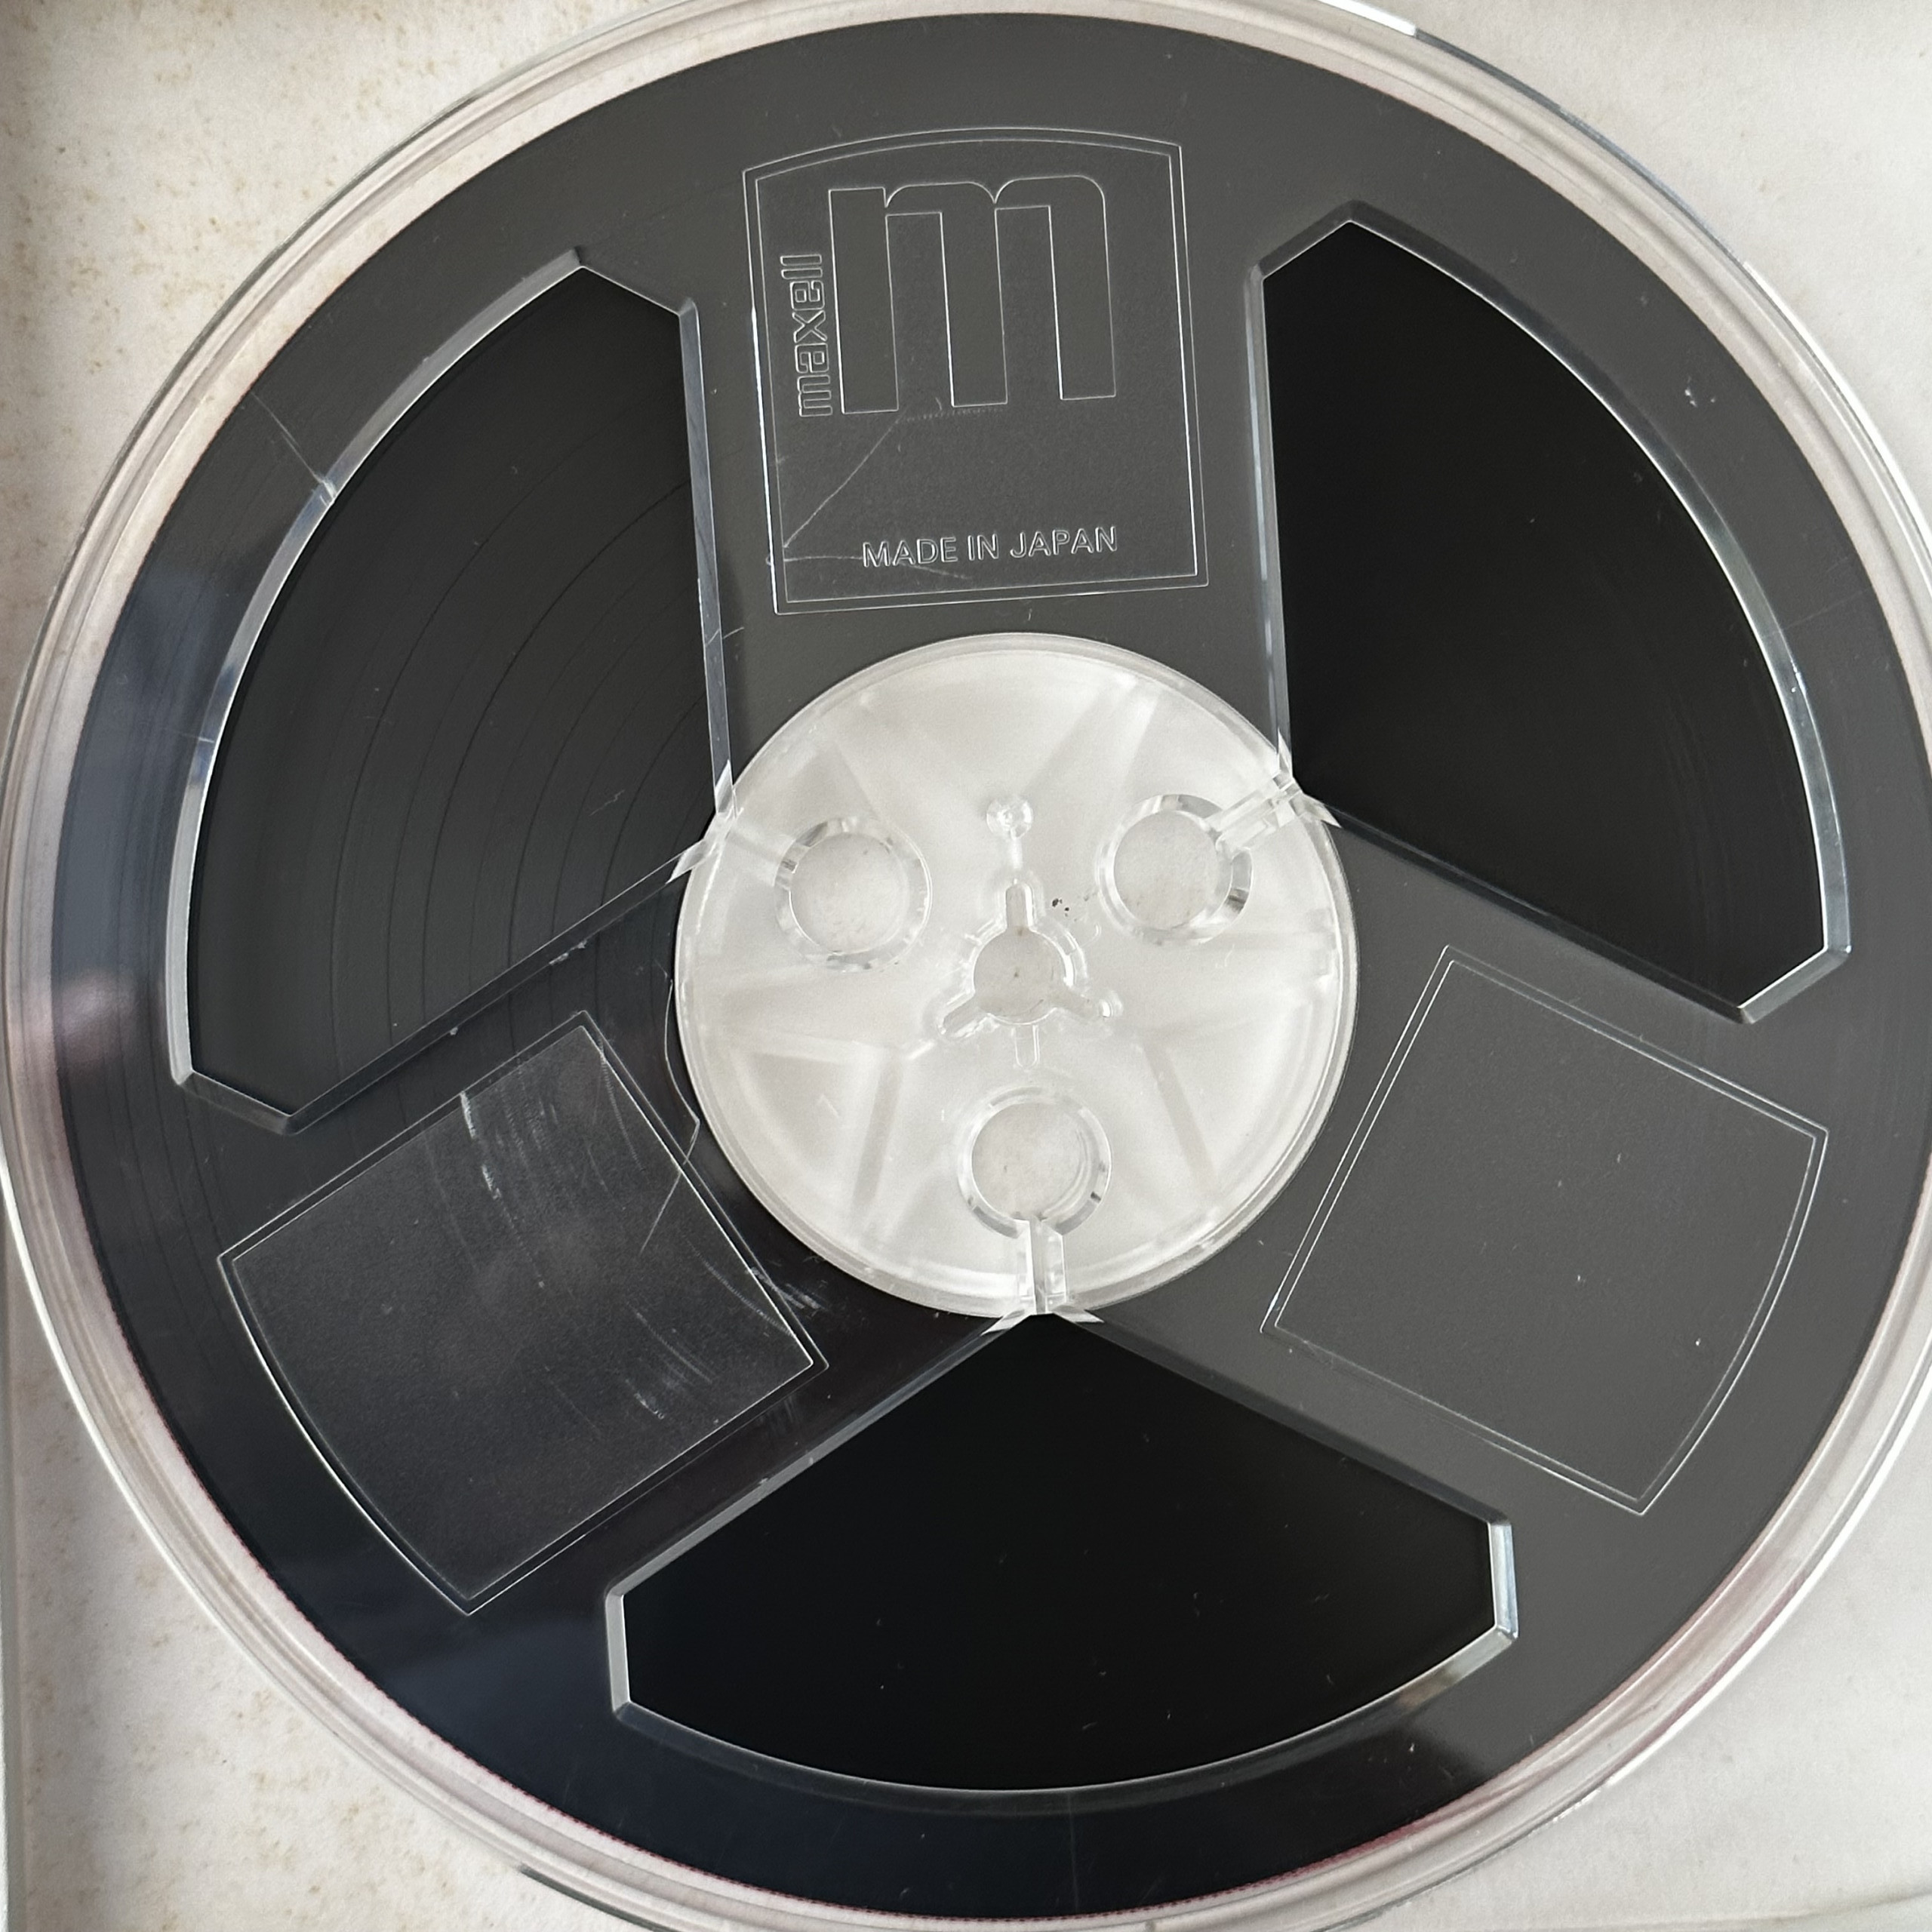 Maxell XL-1 Reel to Reel Recording Tape, LP, 7″ Reel, 1800 ft